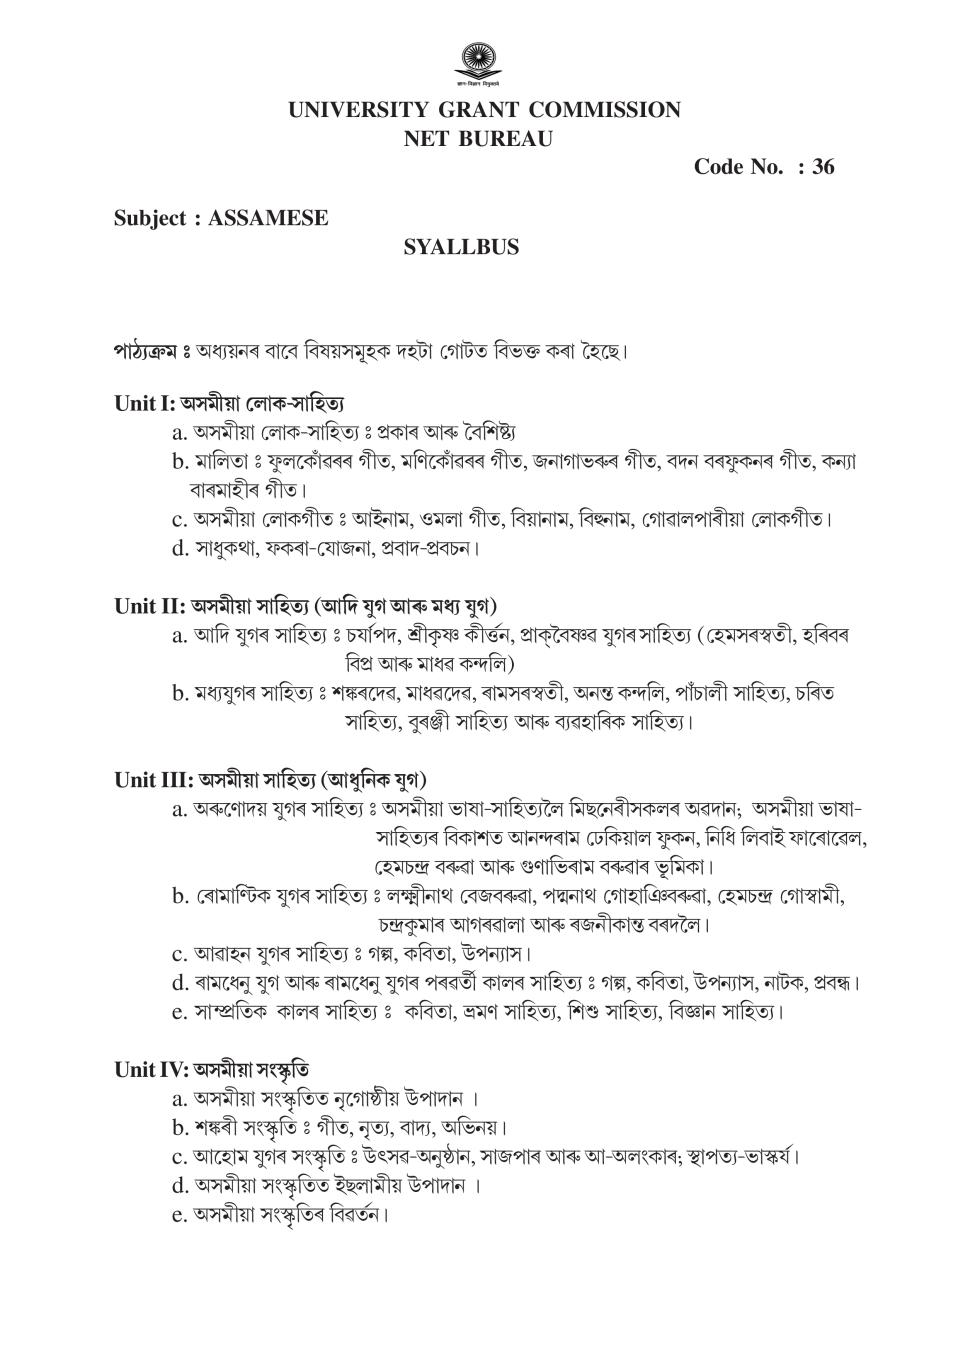 UGC NET Syllabus for Assamese 2020 - Page 1